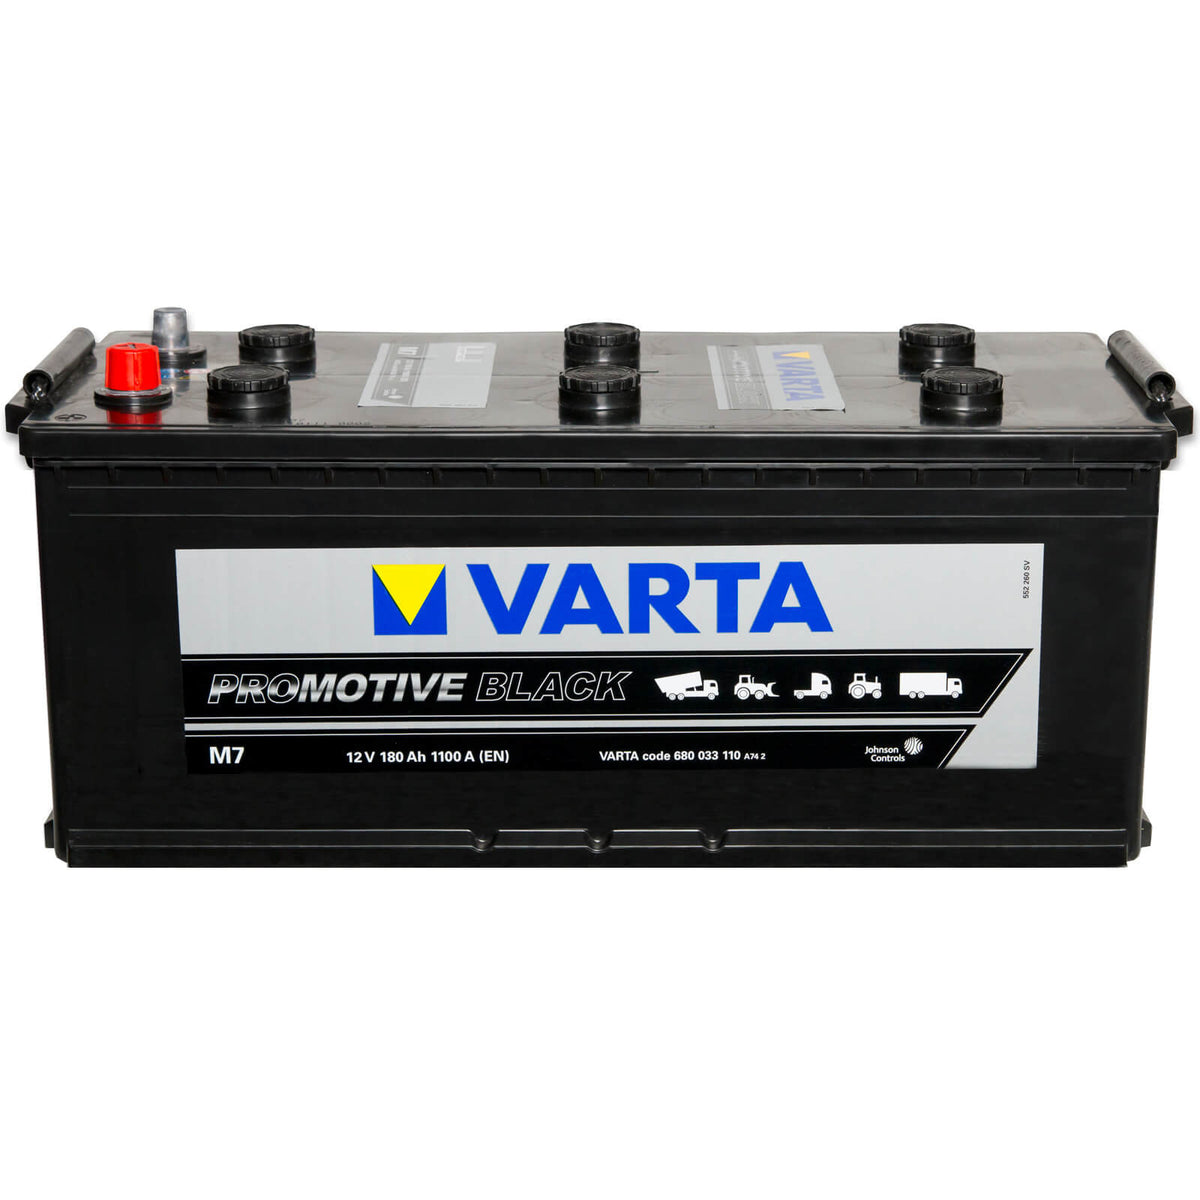 Varta M7 LKW Batterie 180Ah 12V Schlepper Traktor 680033110A742